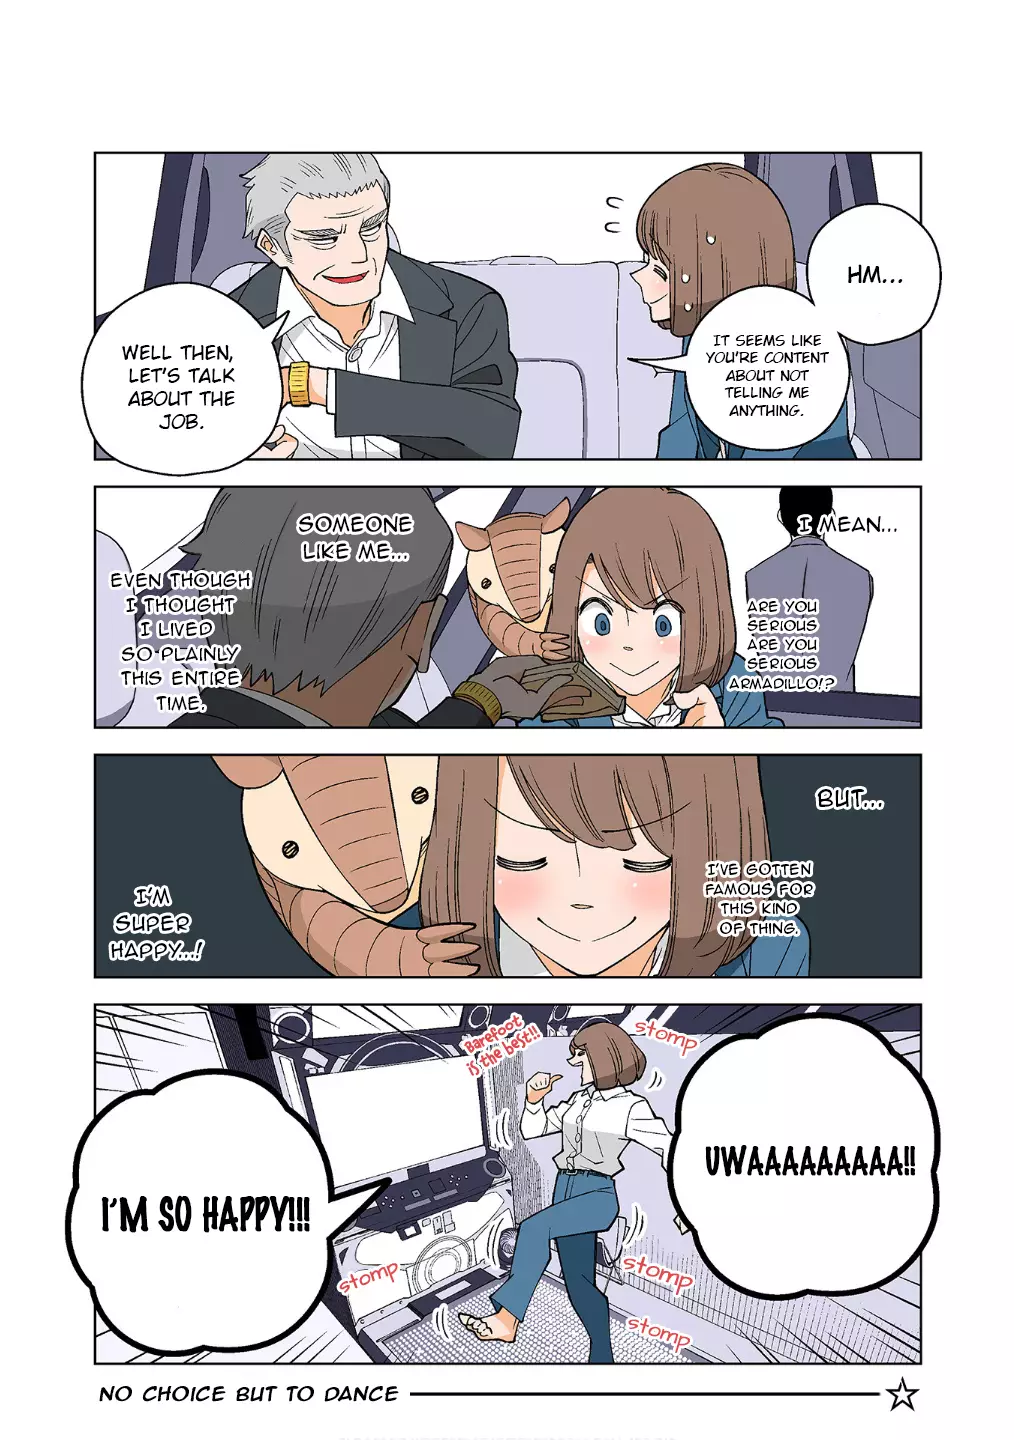 Kanako's Life As An Assassin - 13 page 4